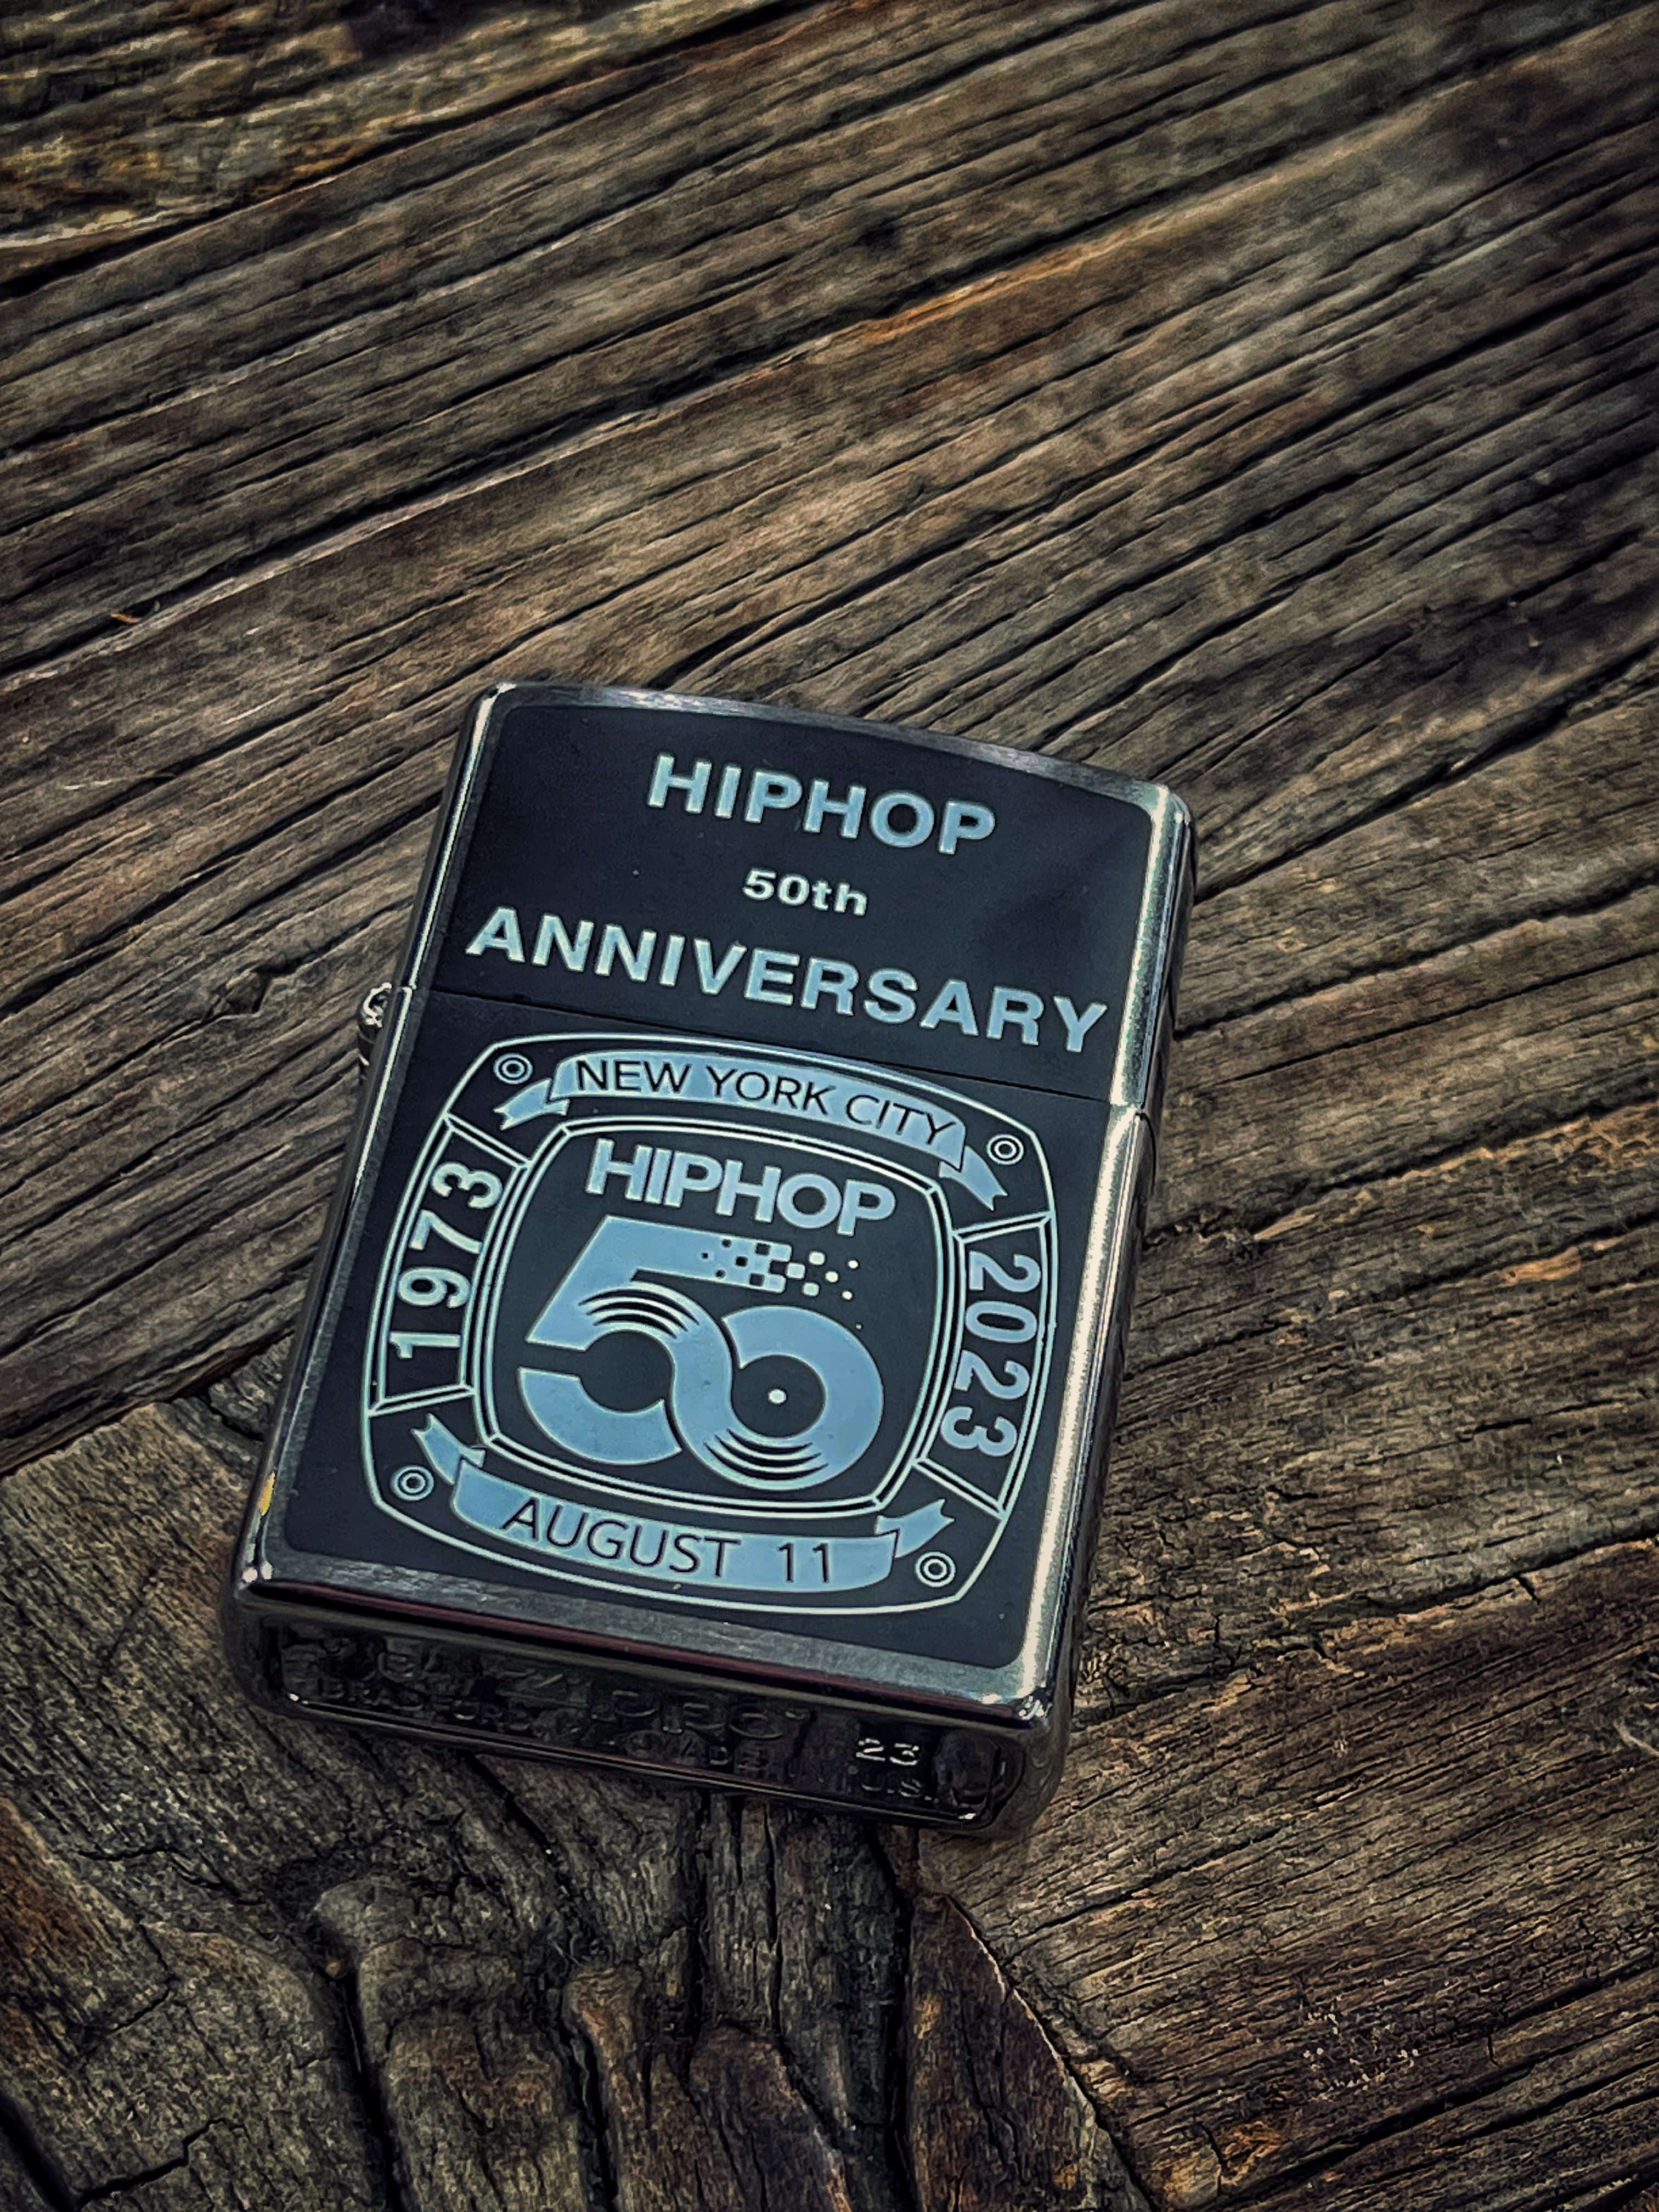 HIPHOP 50th ANNIVERSARY ZIPPO